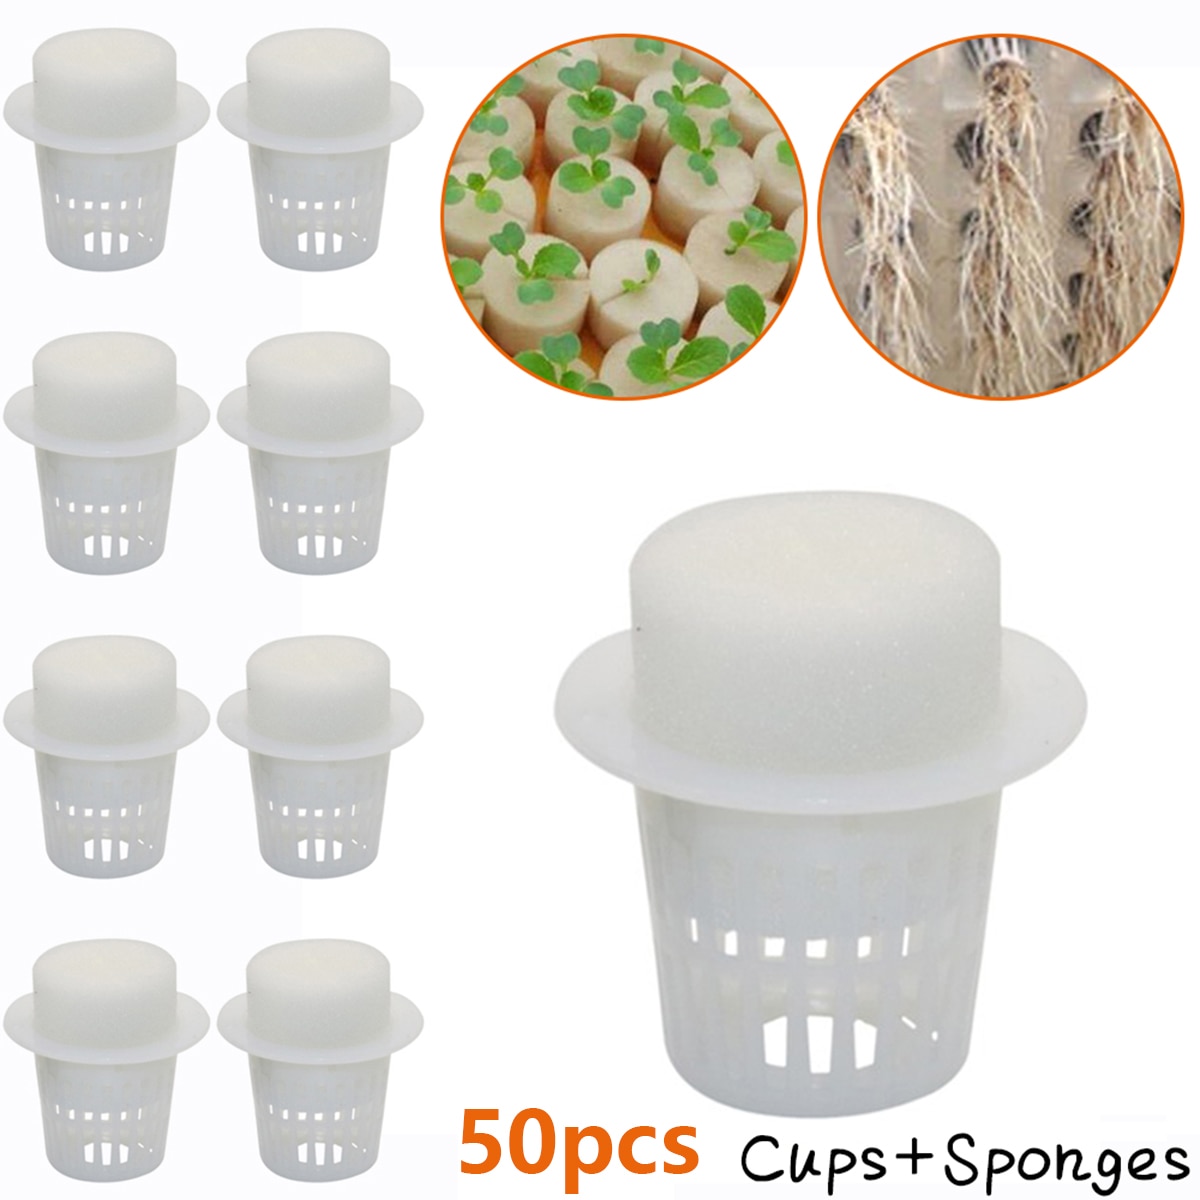 test Twitter Media - 50pcs Nursery Pots Plant Net Cup & 50pcs Cylinders Sponge For Hydroponic Plant Starting Gardening Supplies Garden Accessories $4.40
click>>https://t.co/mKGbIsUW9m
#garden #amazon #aliexpress #rt https://t.co/FkkUnxDjtT